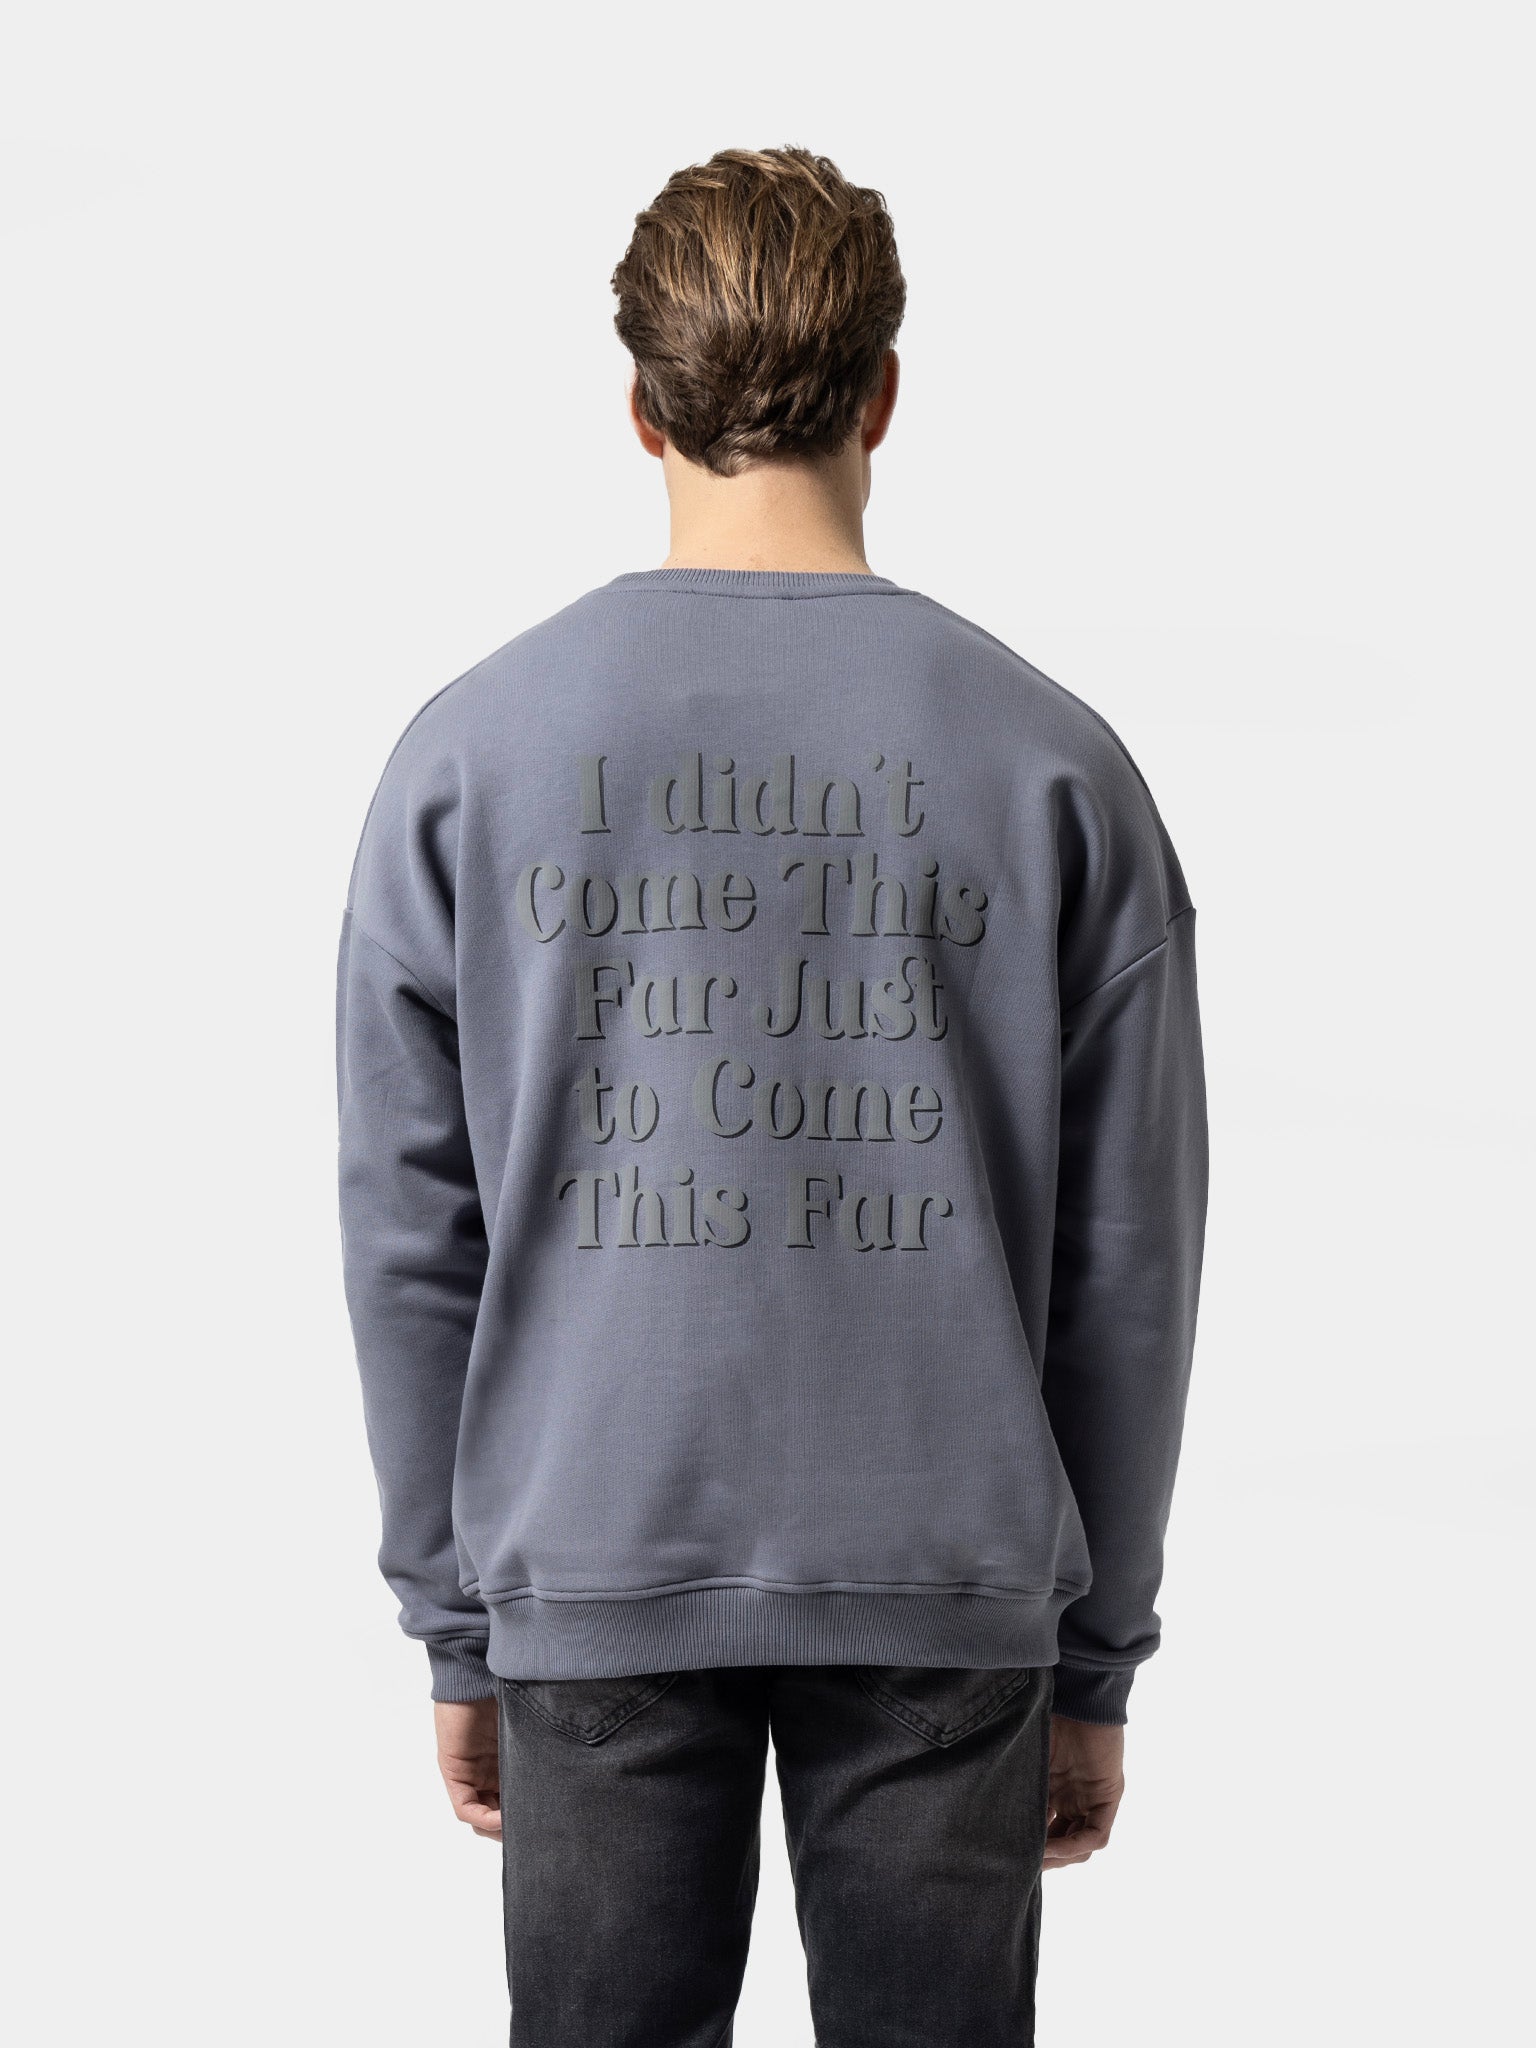 Roadsweater-grey-2.jpg